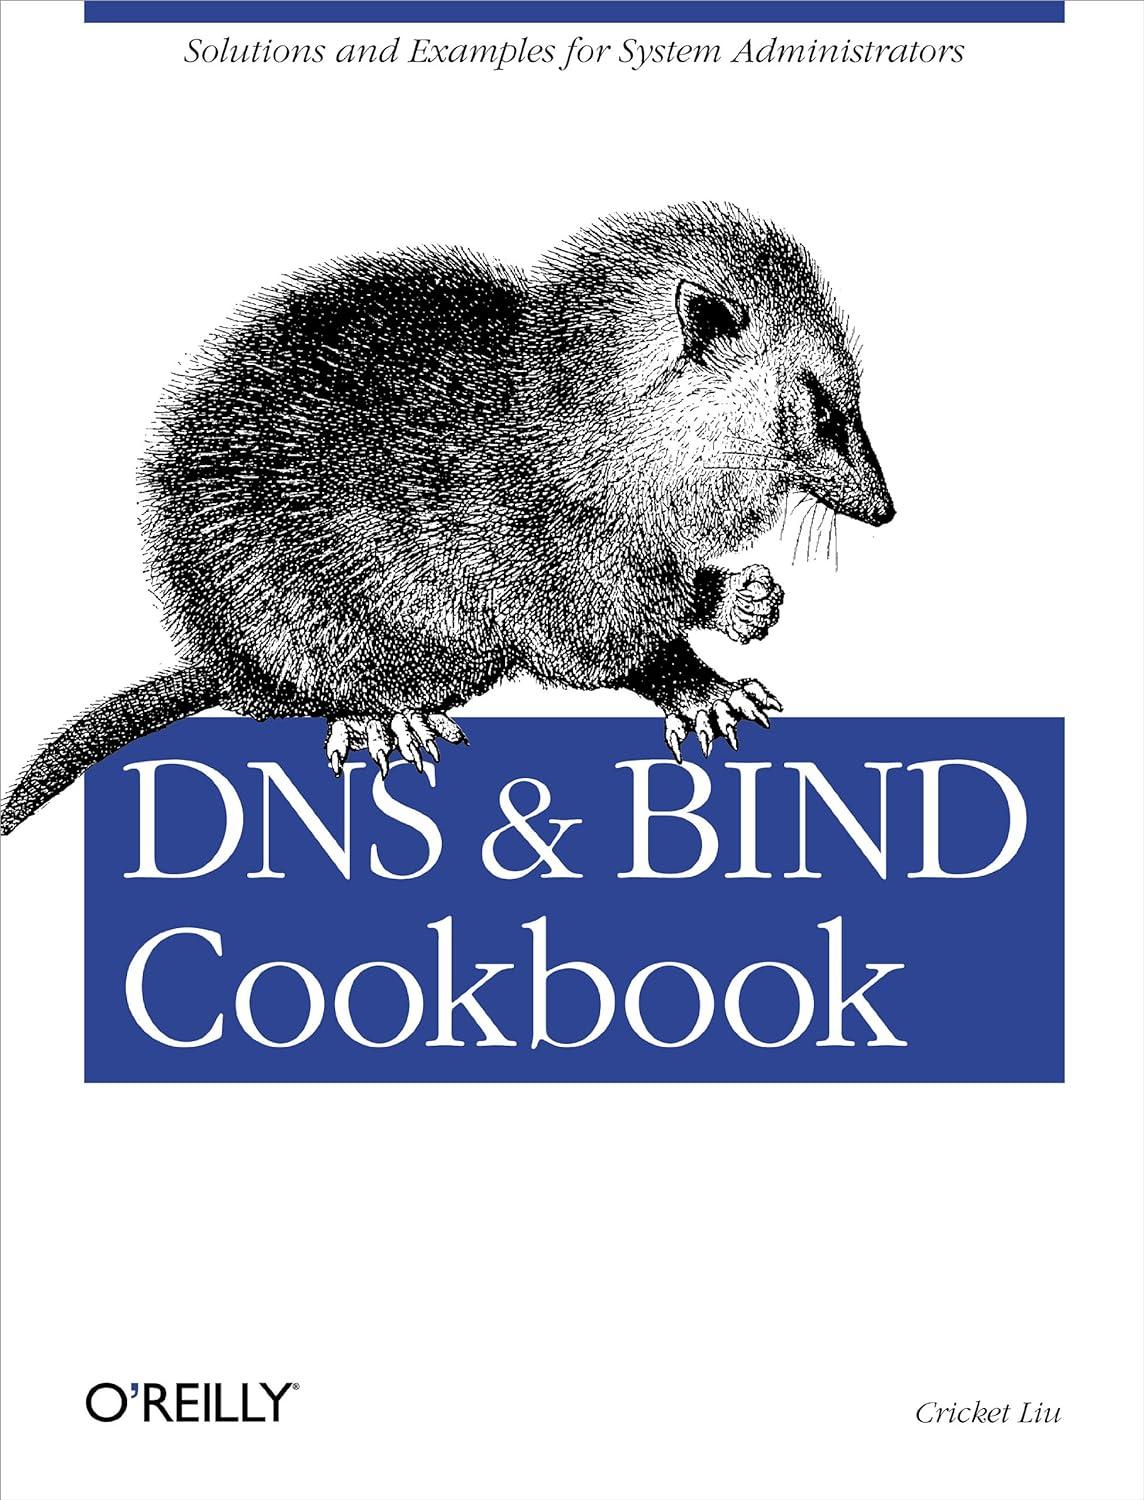 dns and bind cookbook 1st edition cricket liu 0596004109, 978-0596004101